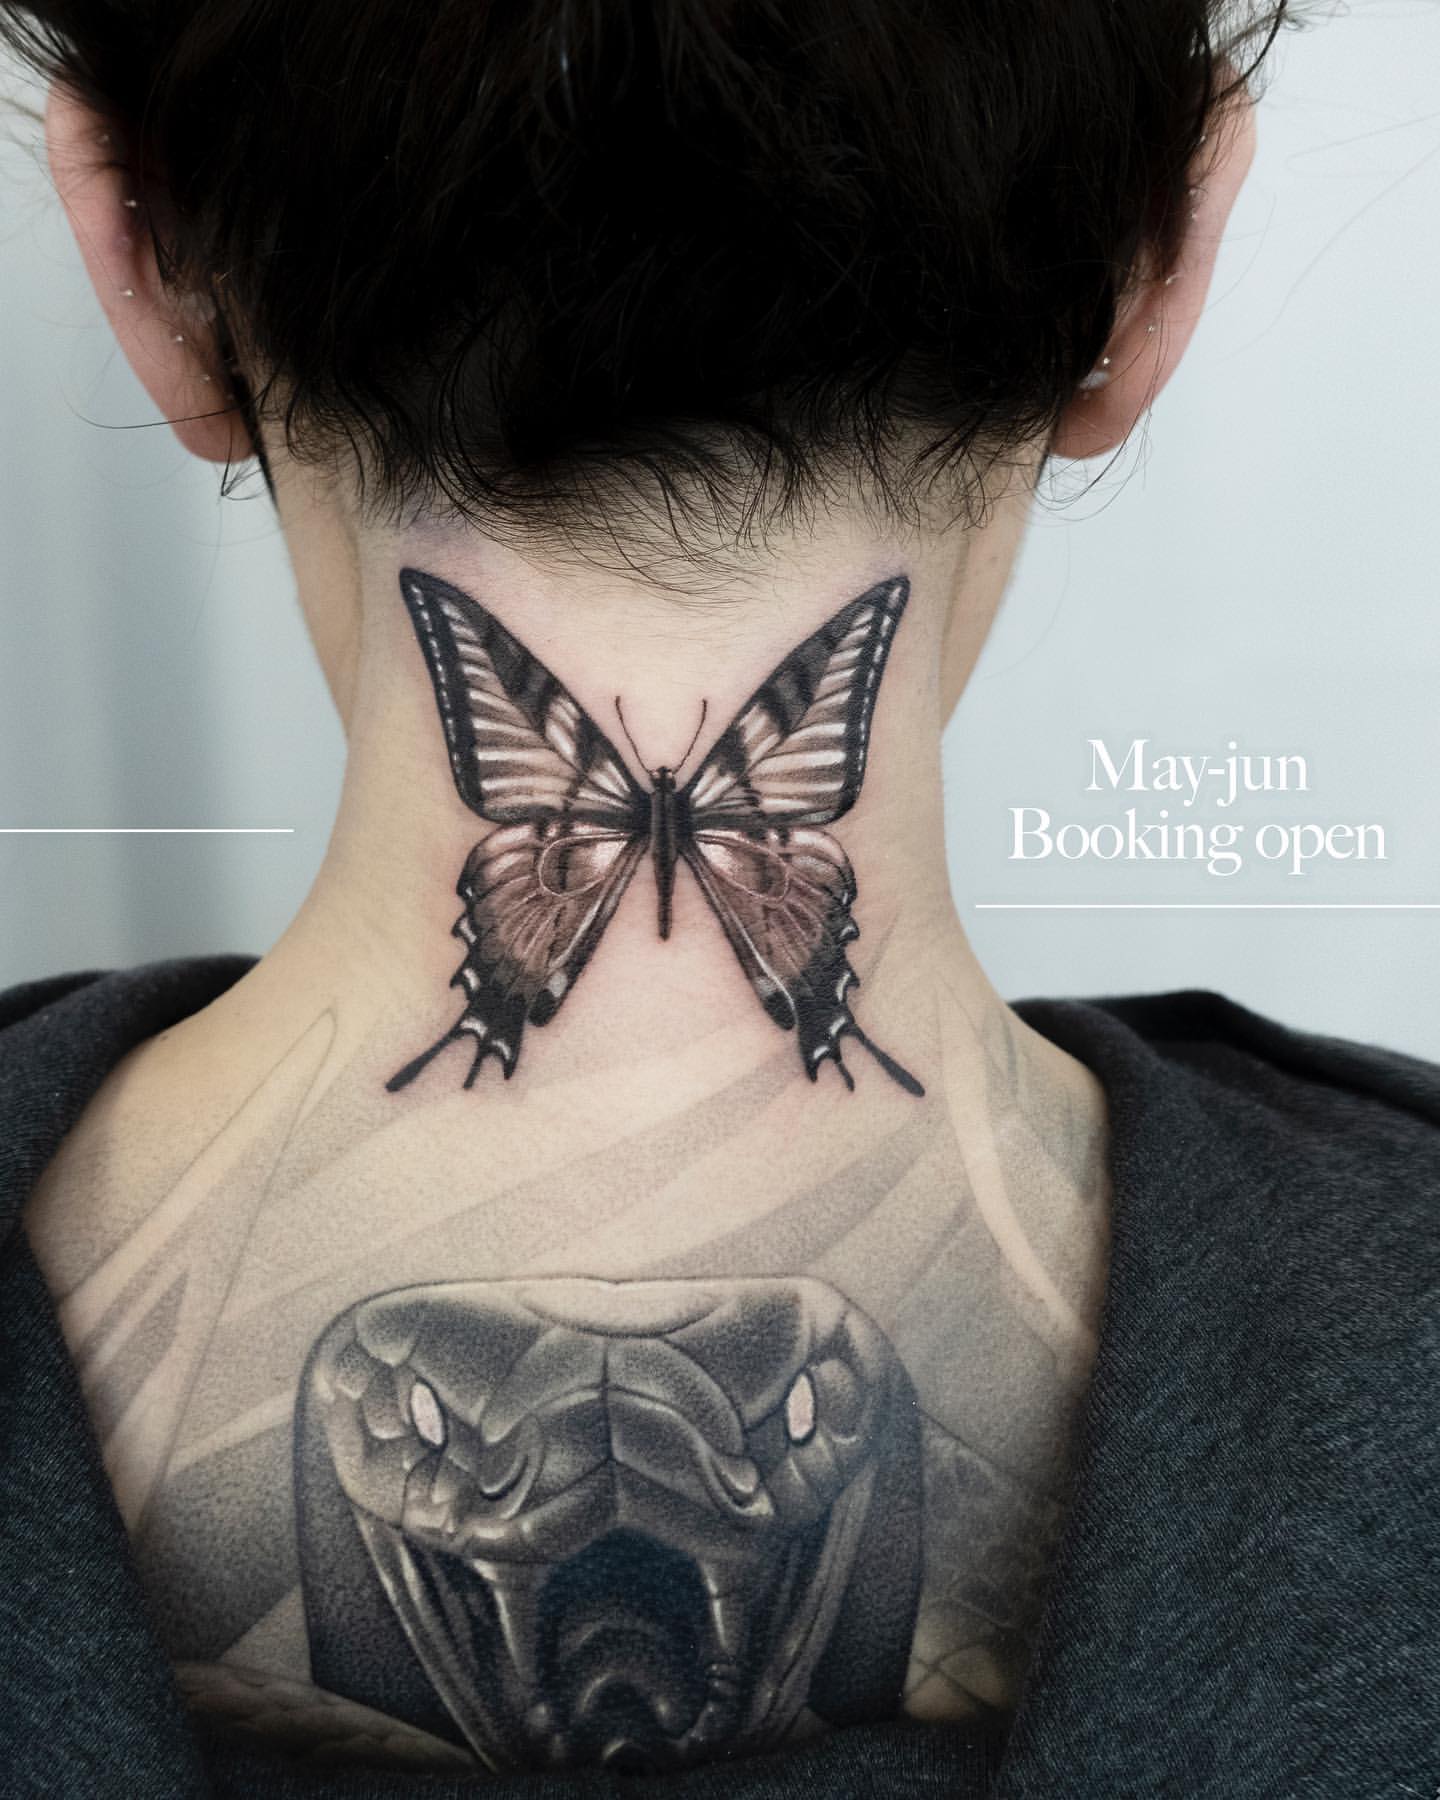 Butterfly Neck Tattoo Ideas 2